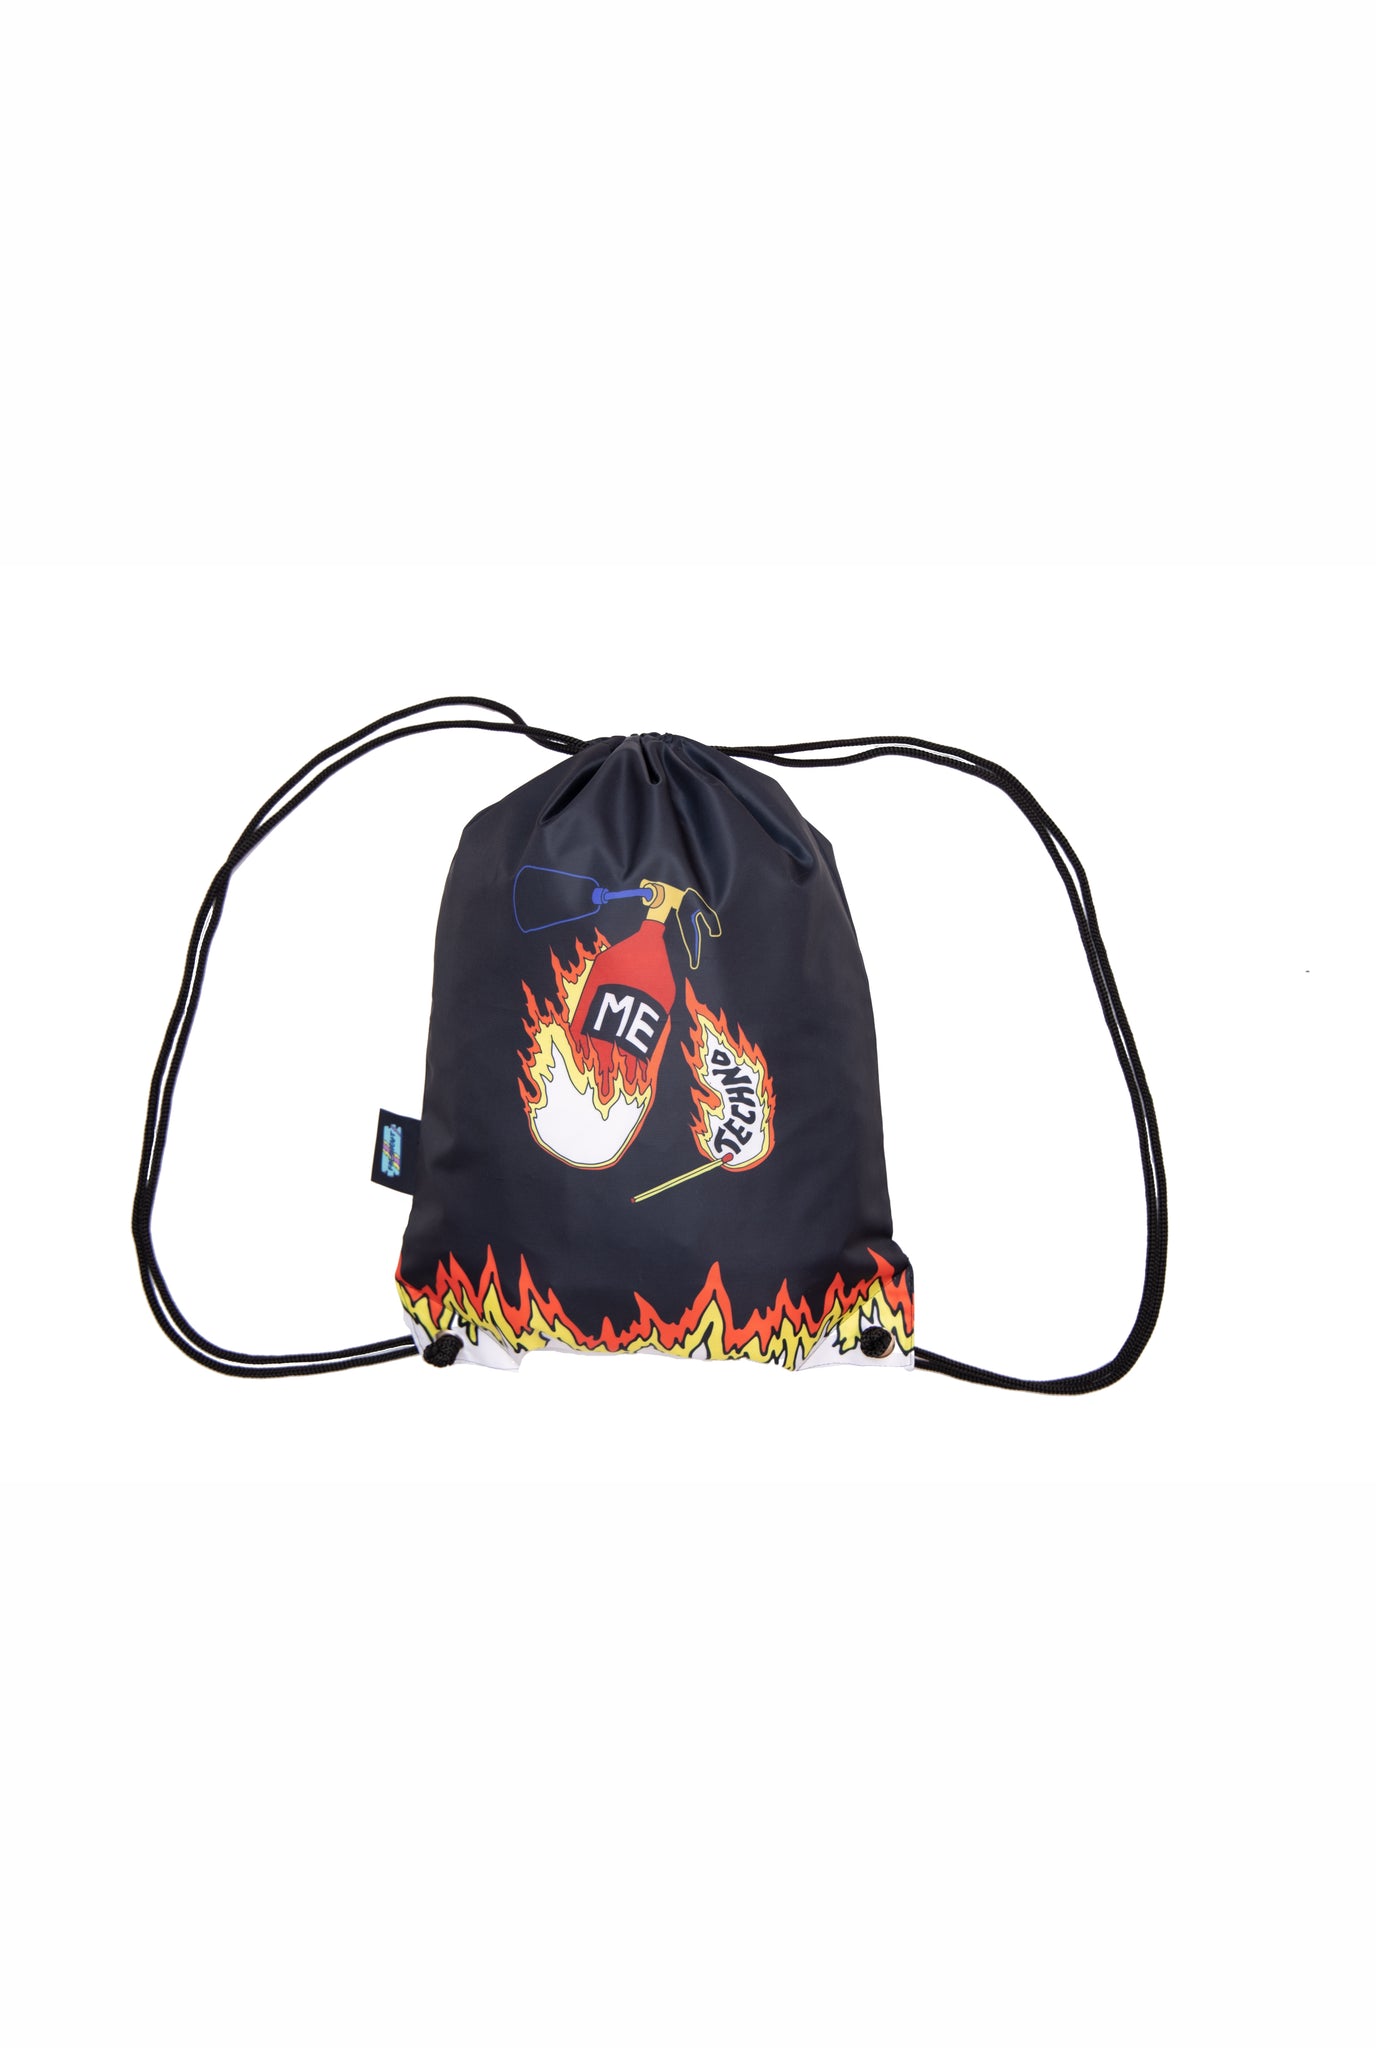 Techno Extinguisher Backpacks